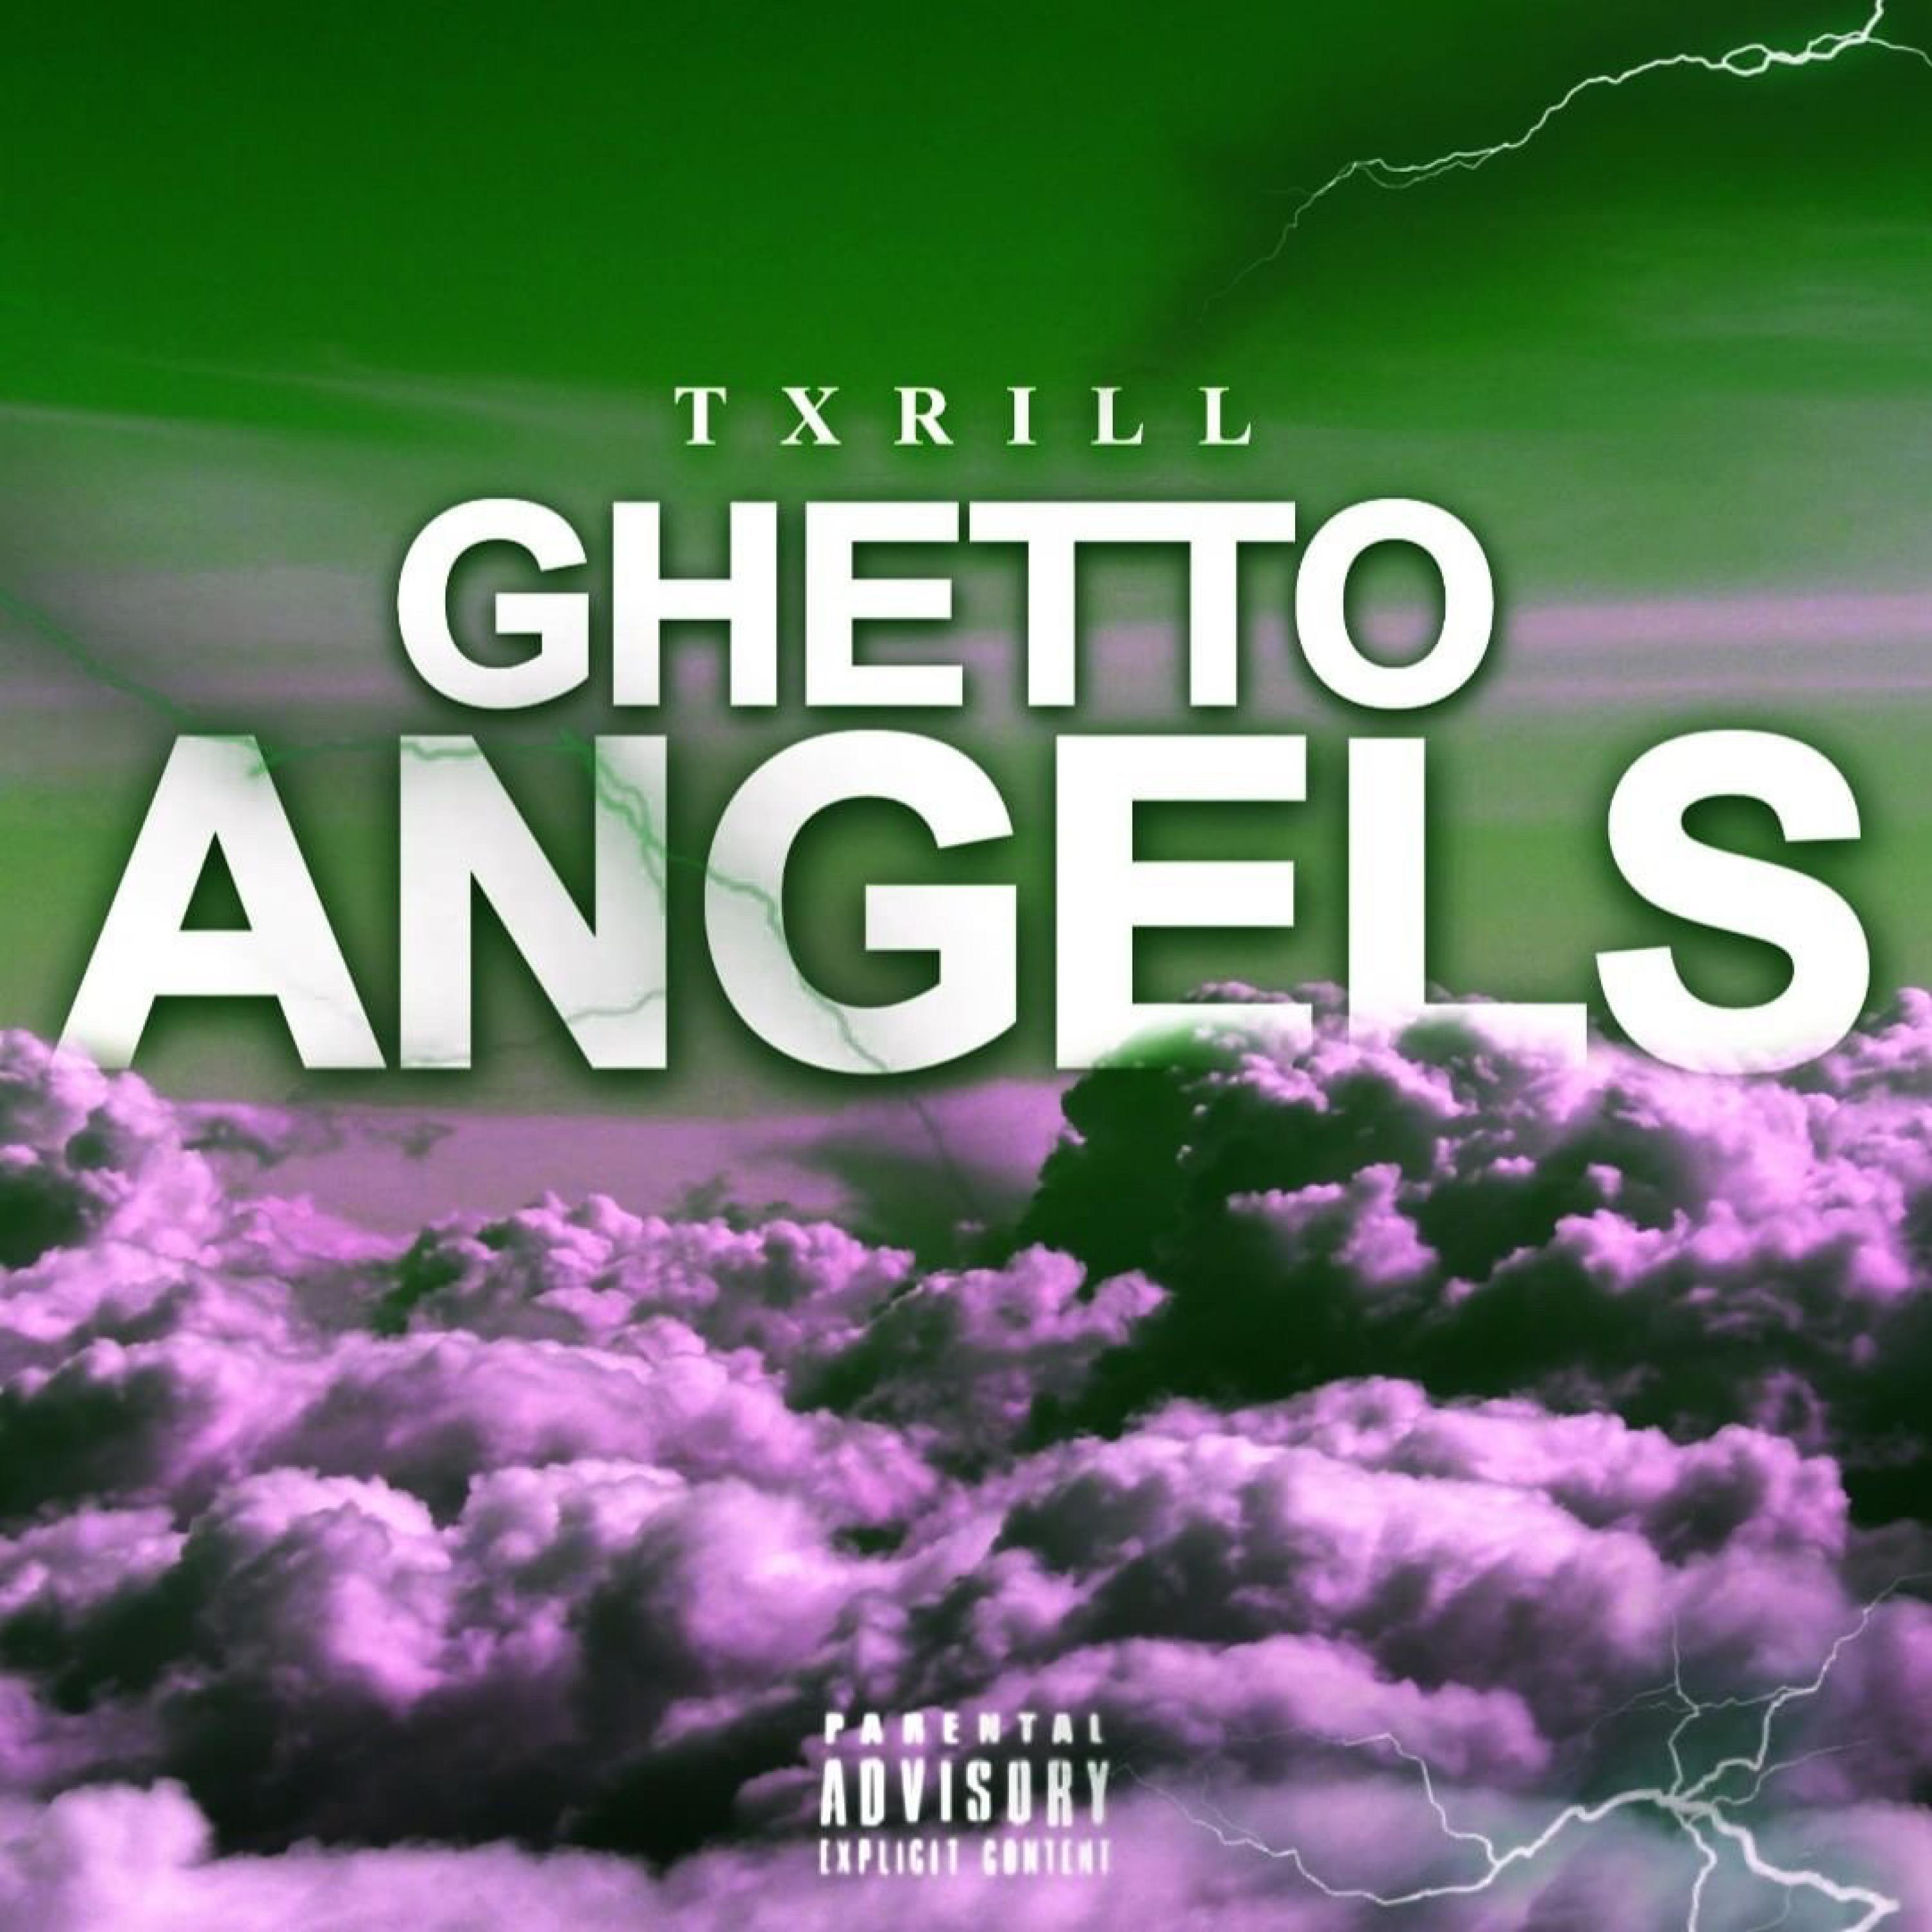 Txrill - Ghetto Angels